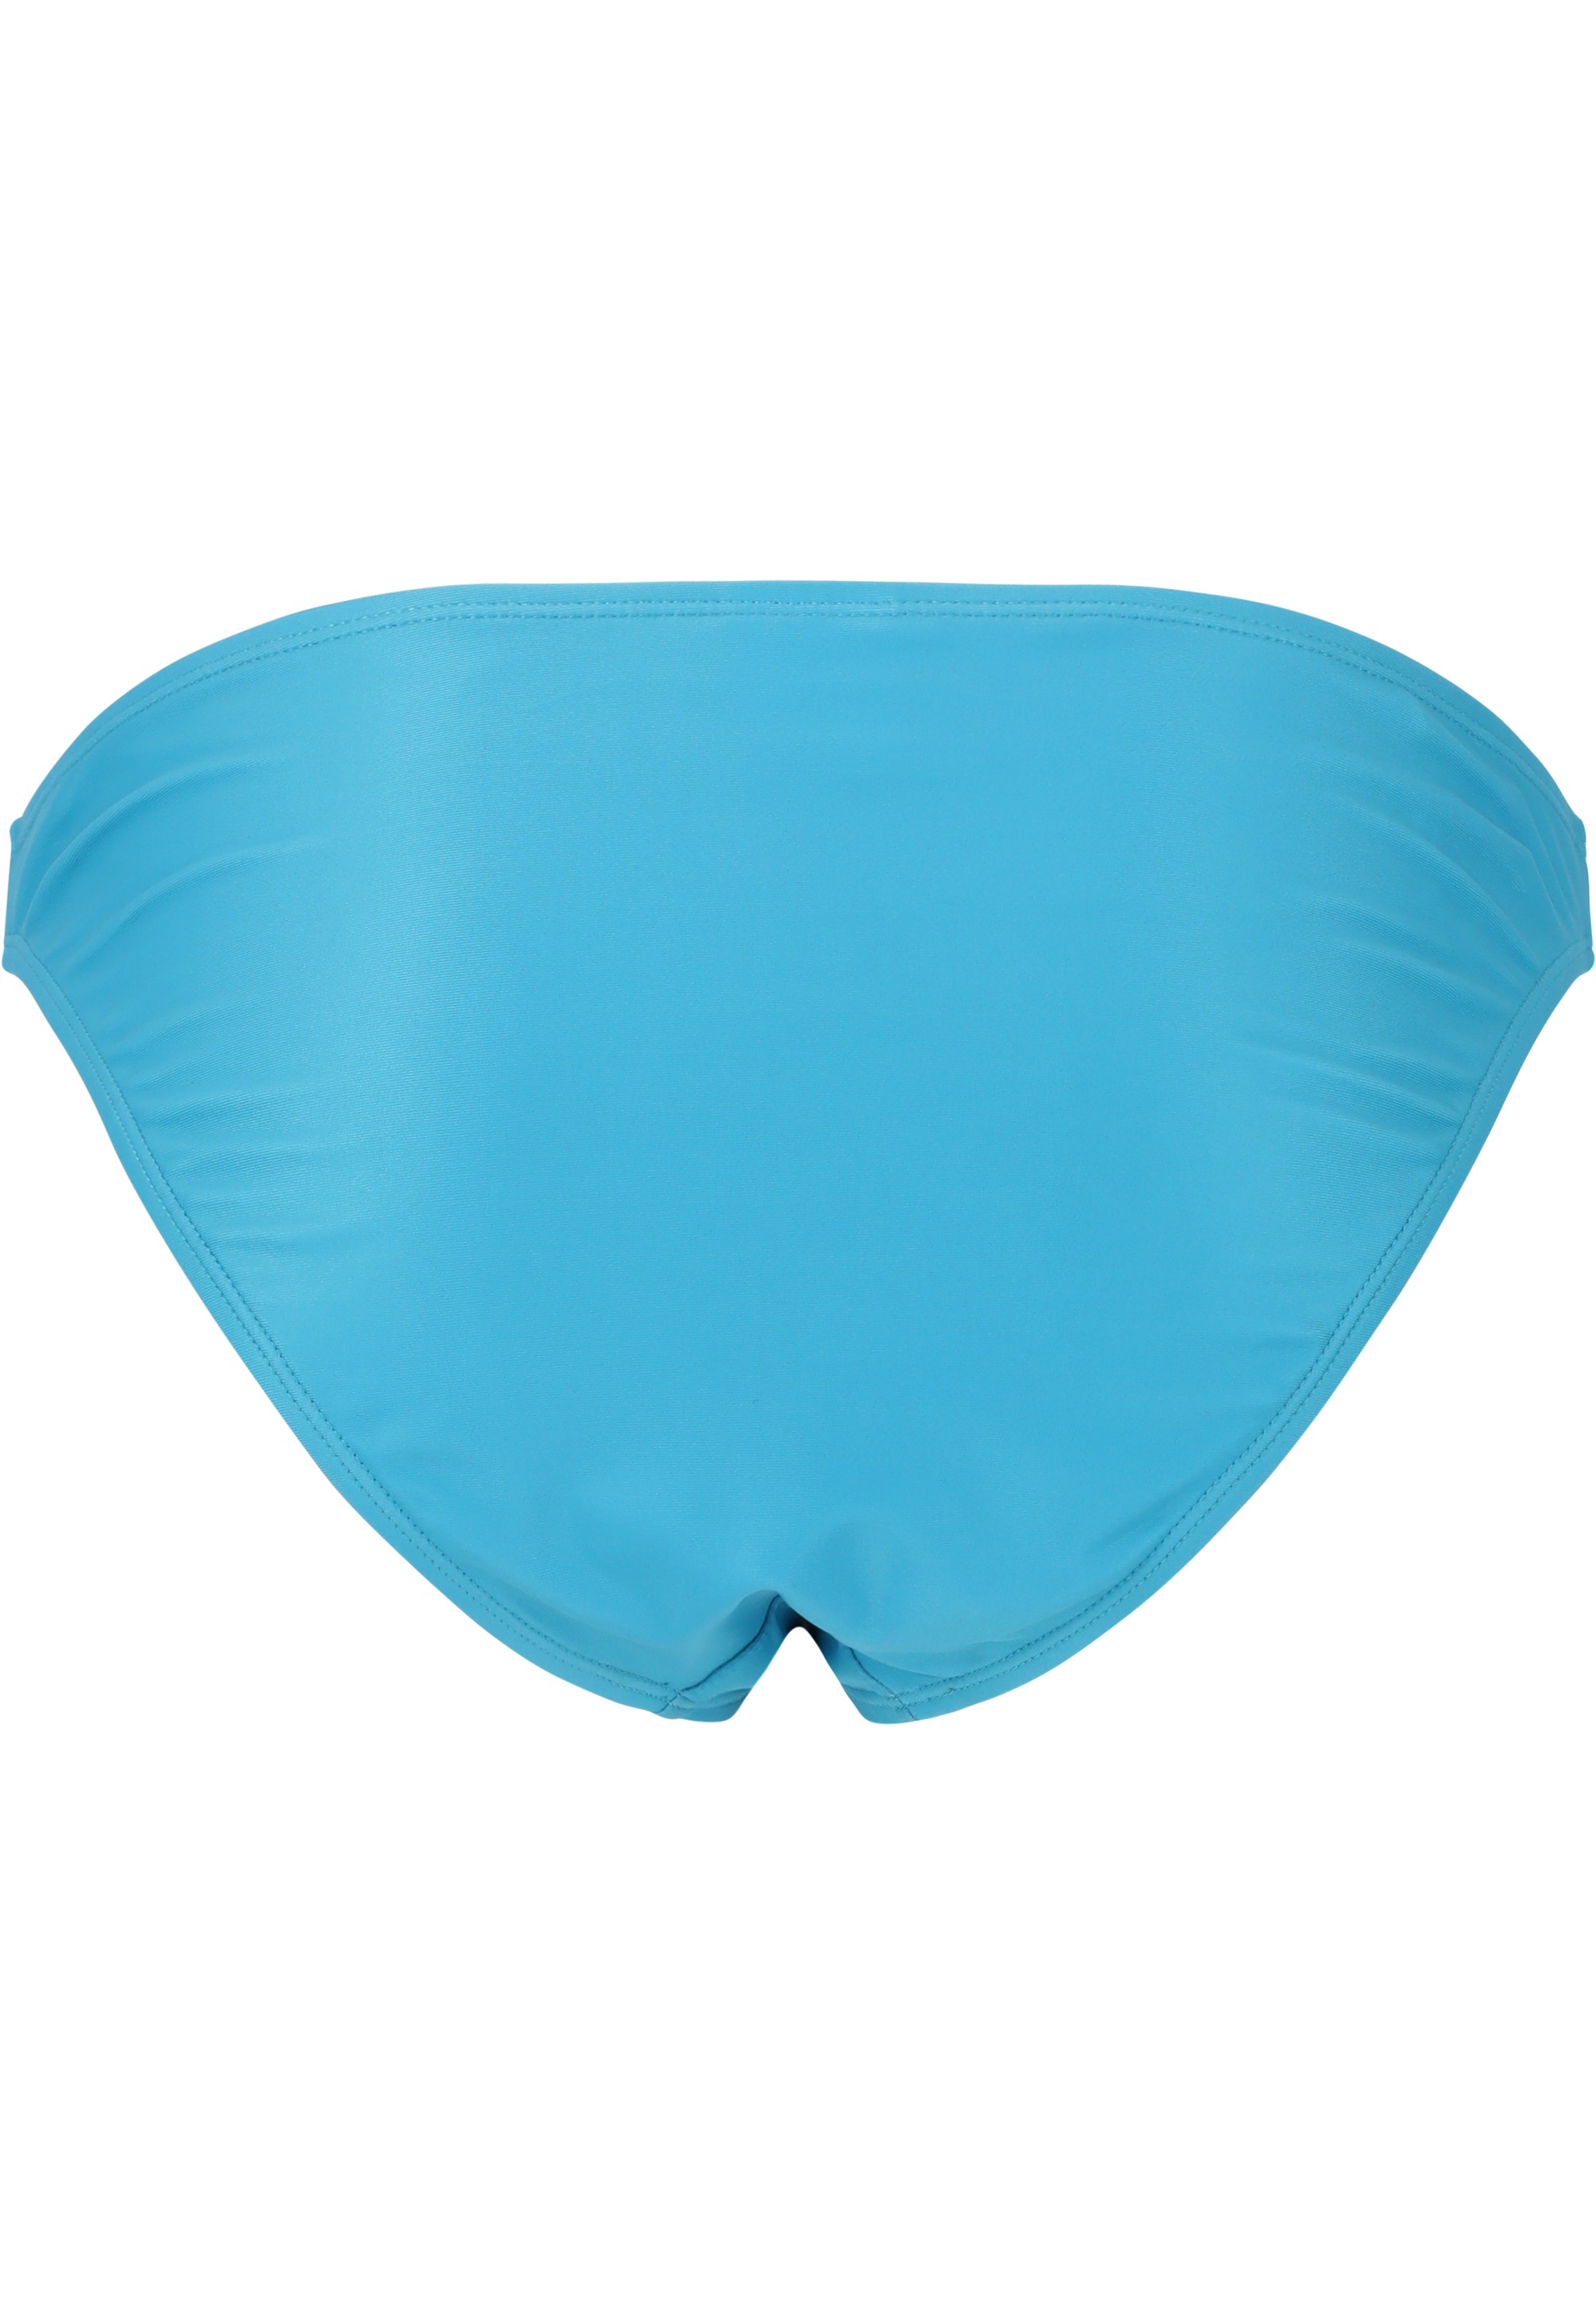 CRUZ Bikini-Hose »Aprilia«, (1 St., Panty), mit innovativer QUICK DRY-Technologie